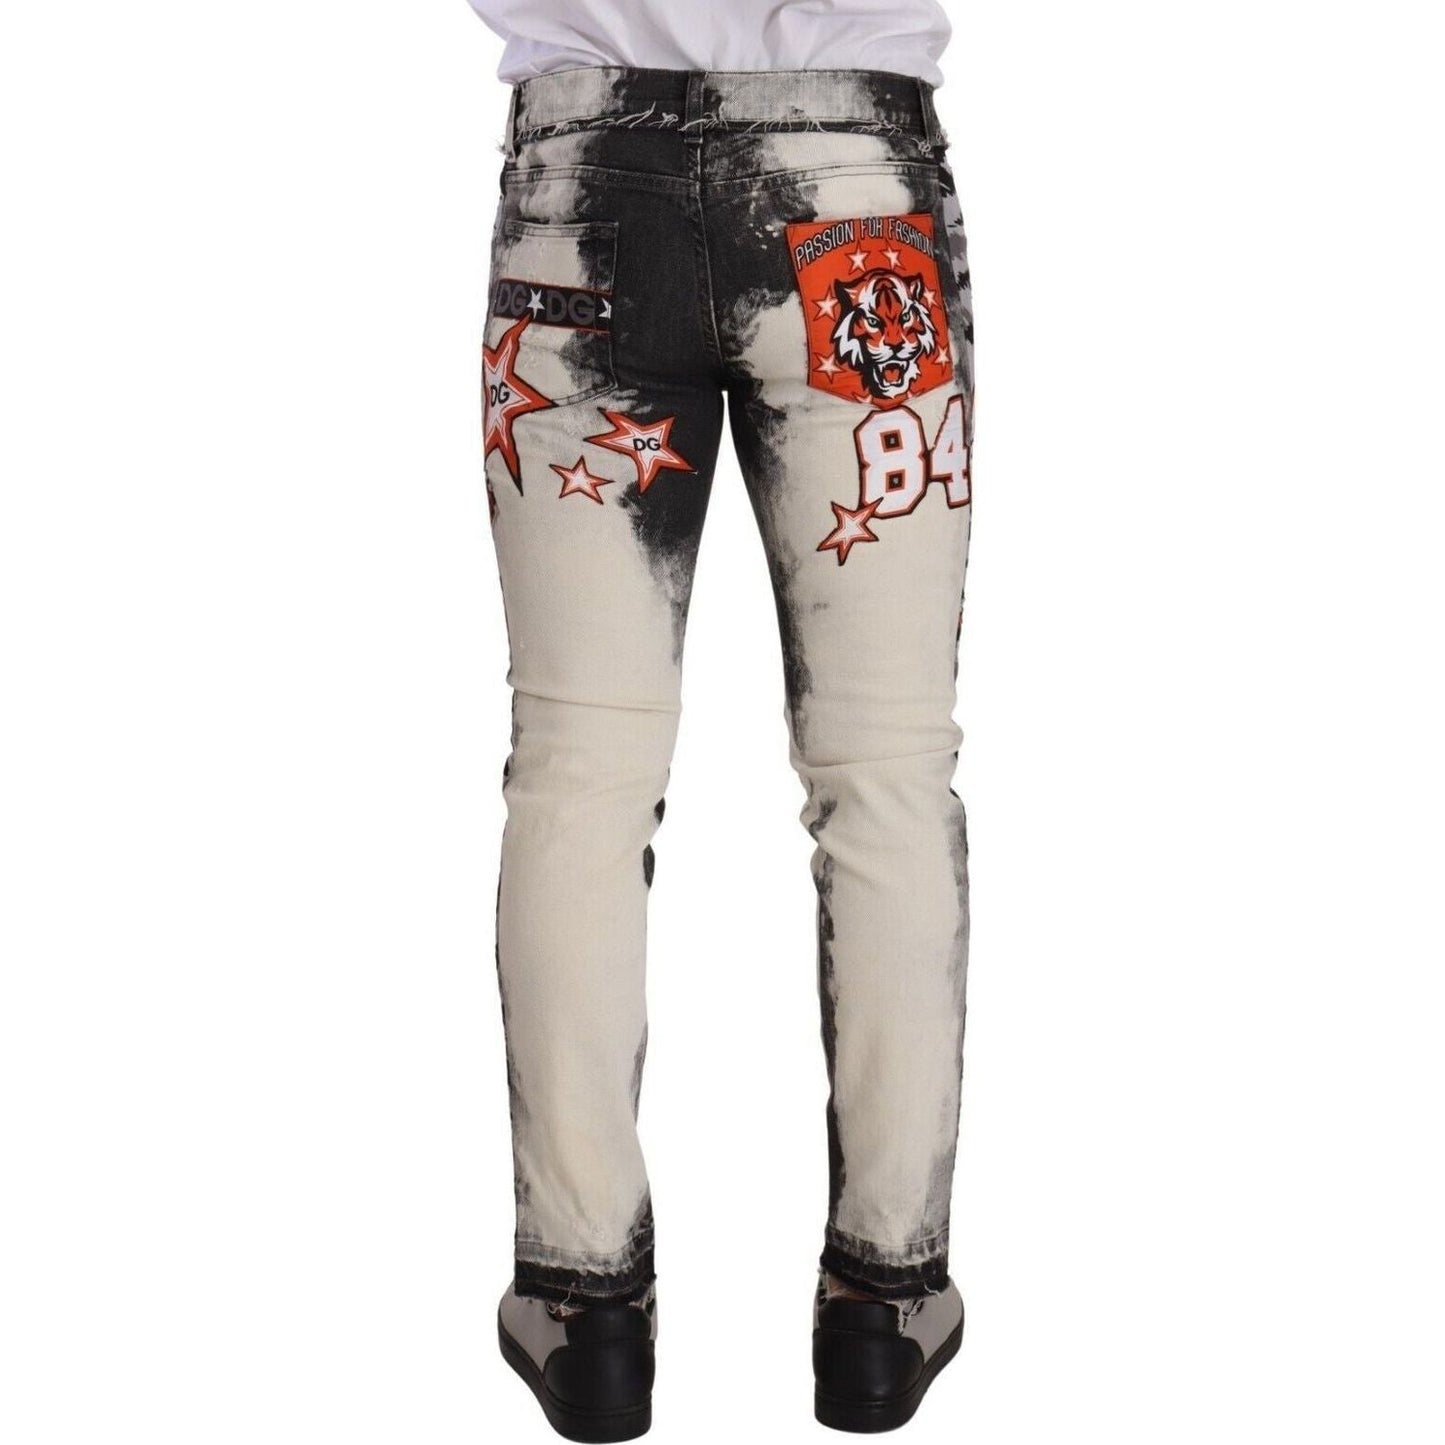 Dolce & Gabbana Chic Slim Fit Star Motif Denim Jeans white-black-cotton-distressed-skinny-denim-jeans